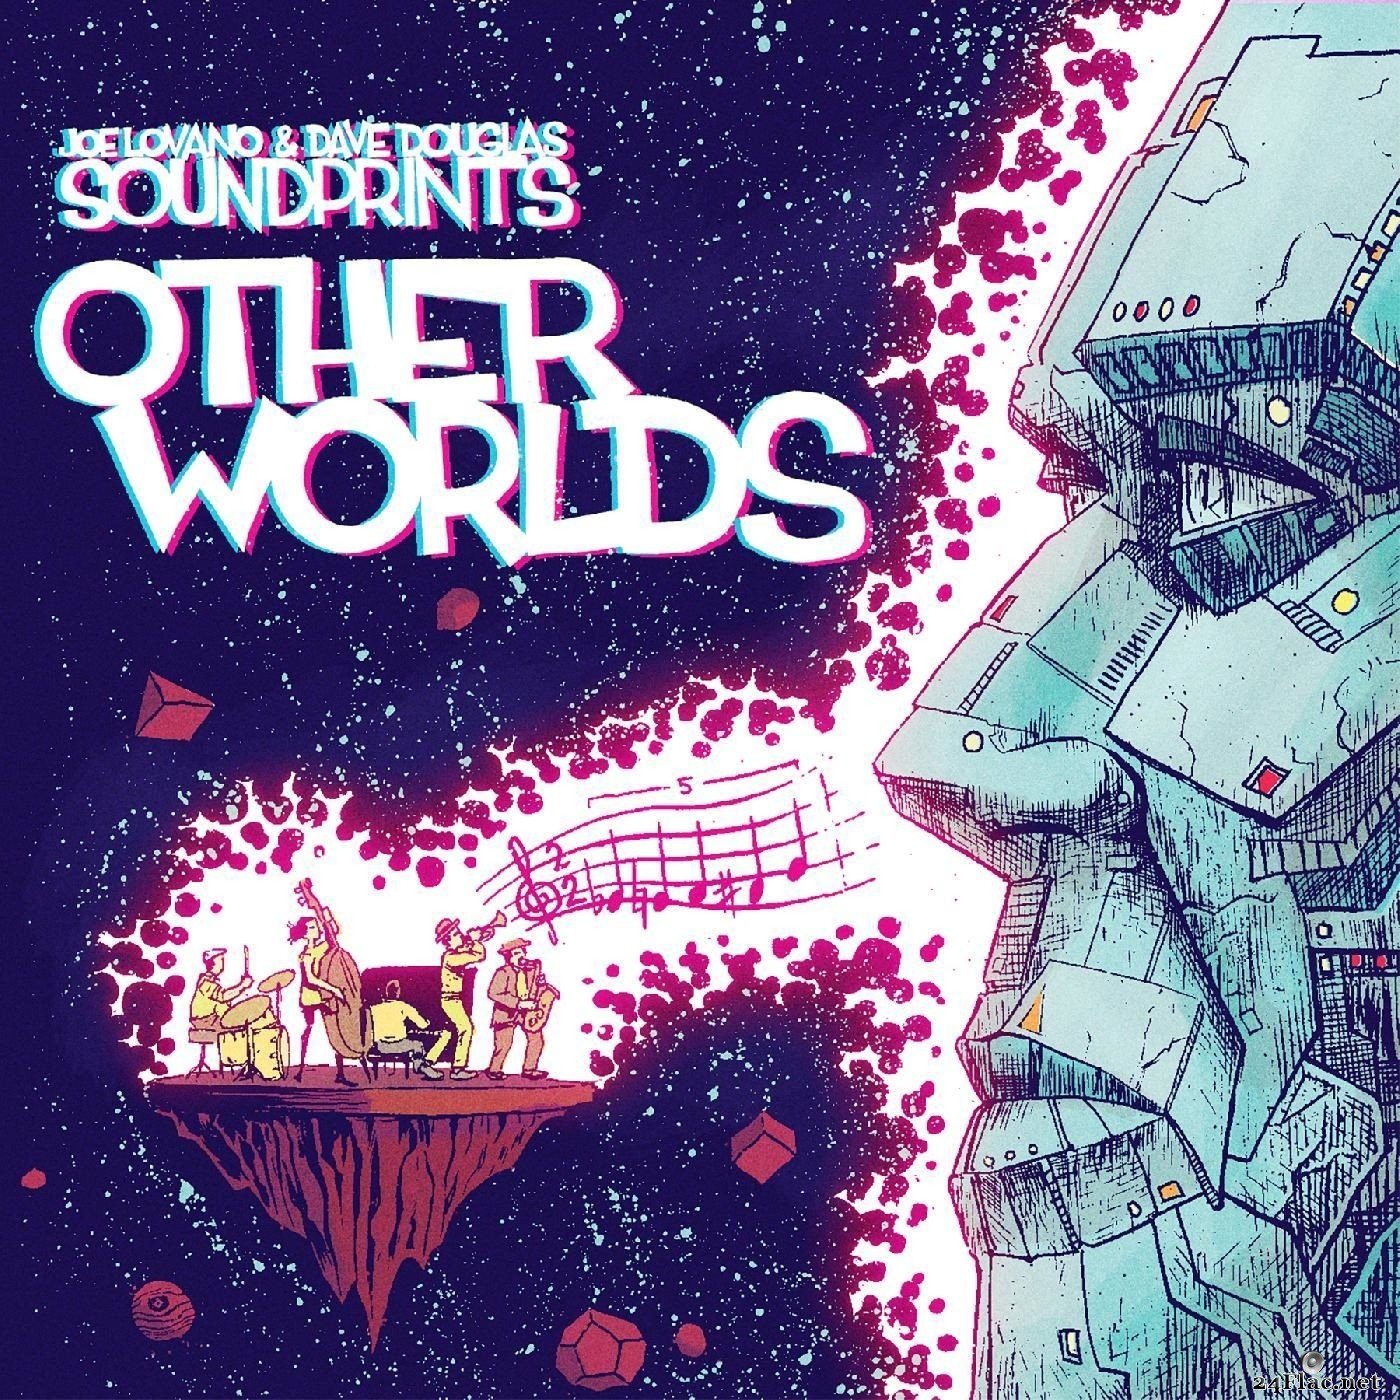 Joe Lovano & Dave Douglas Sound Prints - Other Worlds (2021) Hi-Res